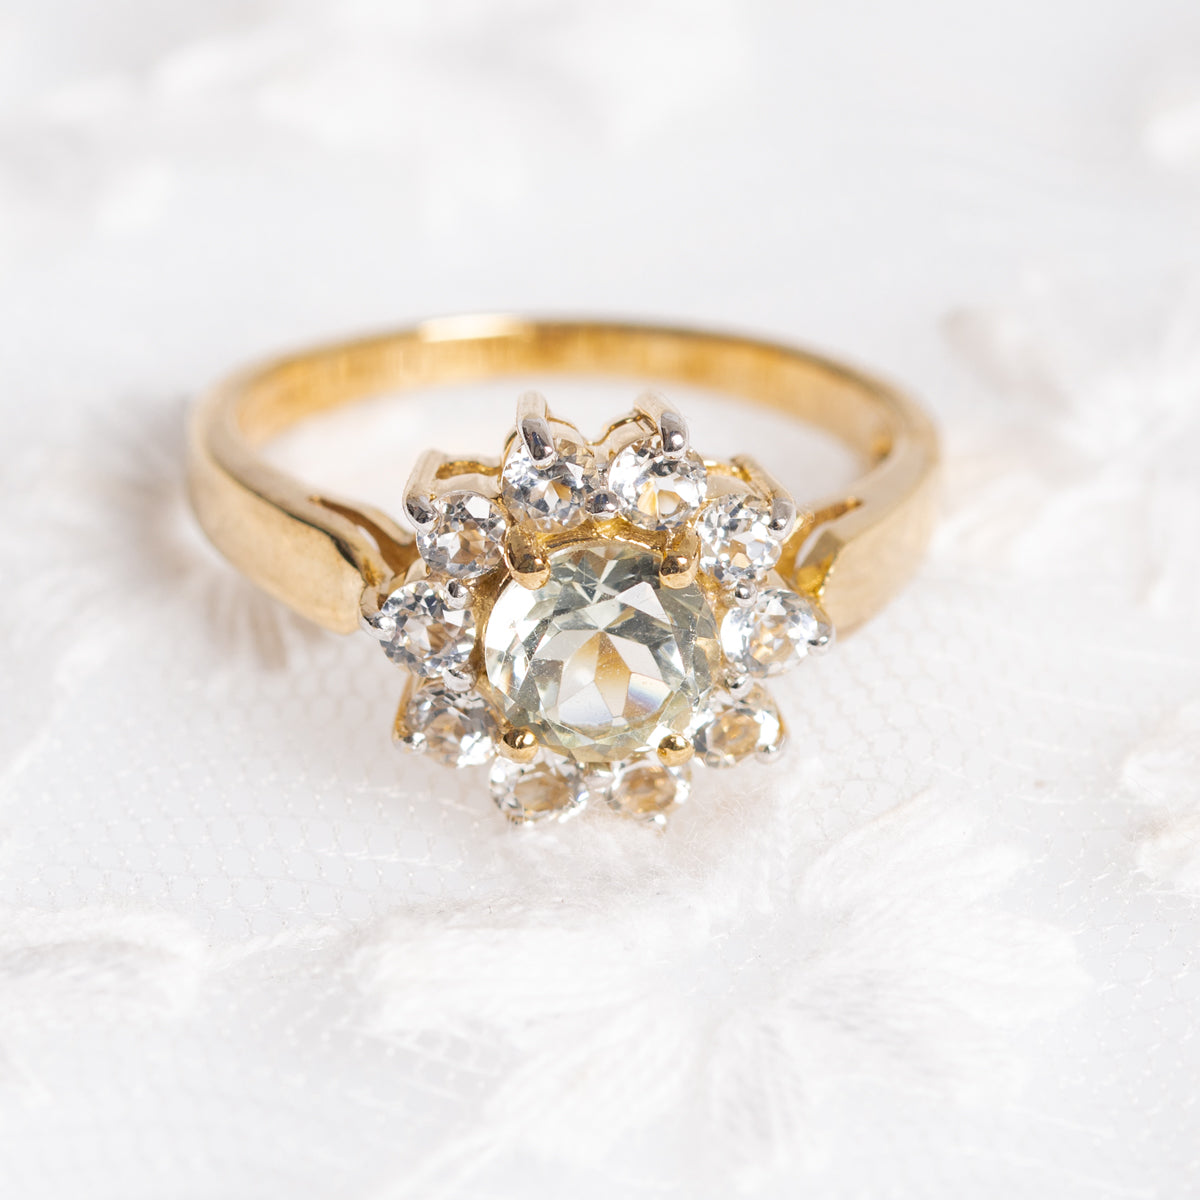 9ct Gold Ring With Aquamarine Gemstone & Halo Design Hallmarked 2007 (A1376)